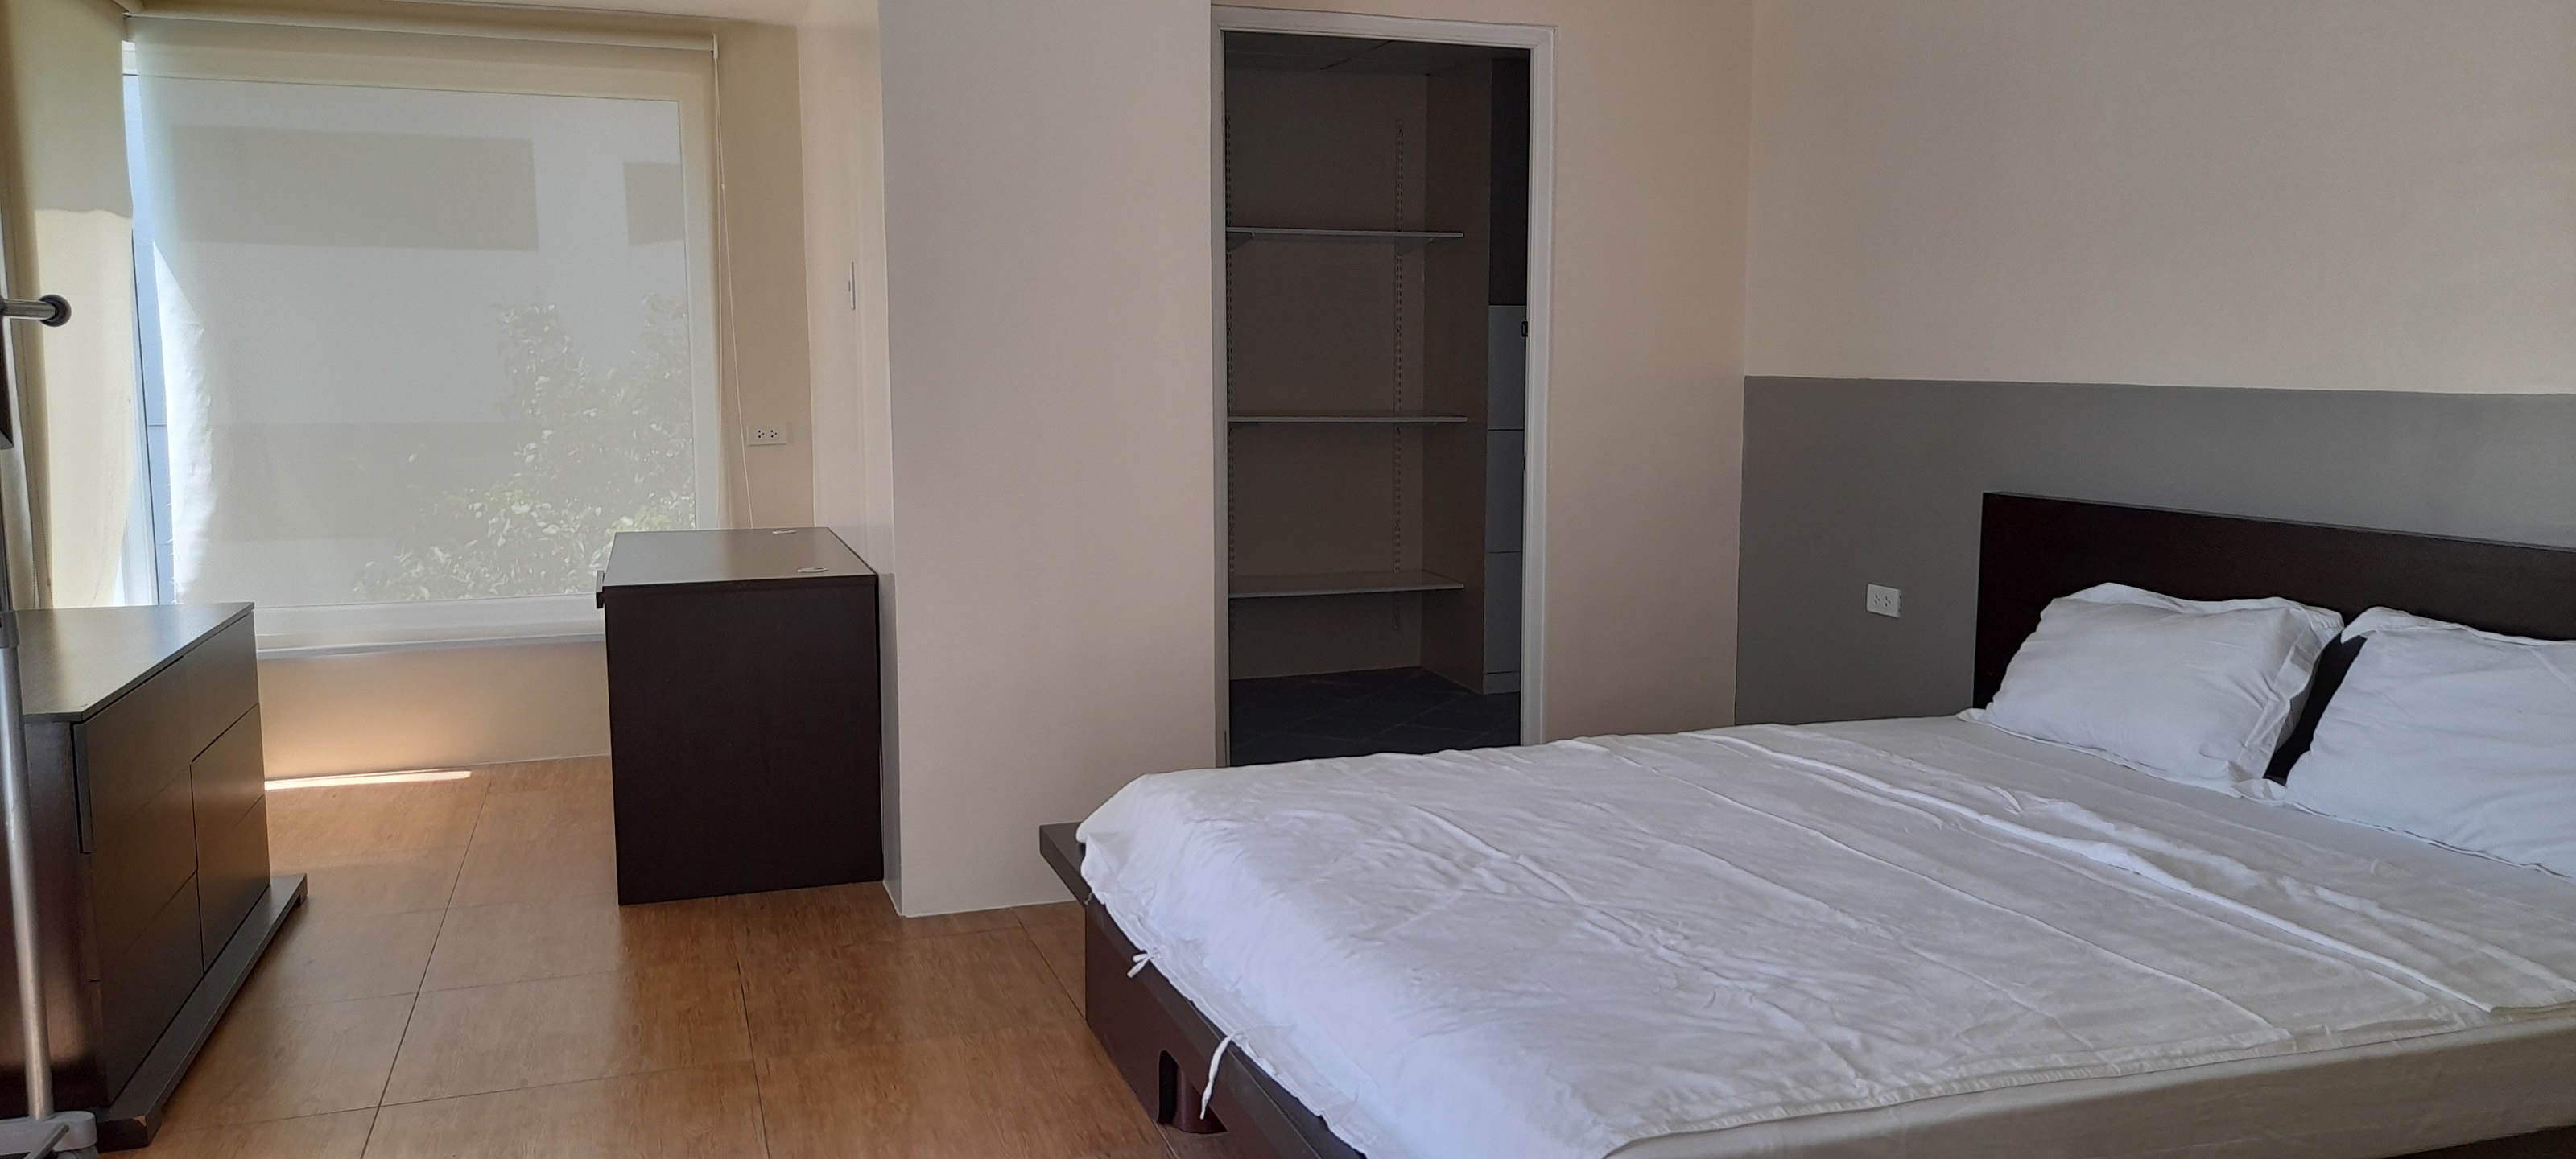 2-bedroom-furnished-apartment-in-near-ayala-cebu-city